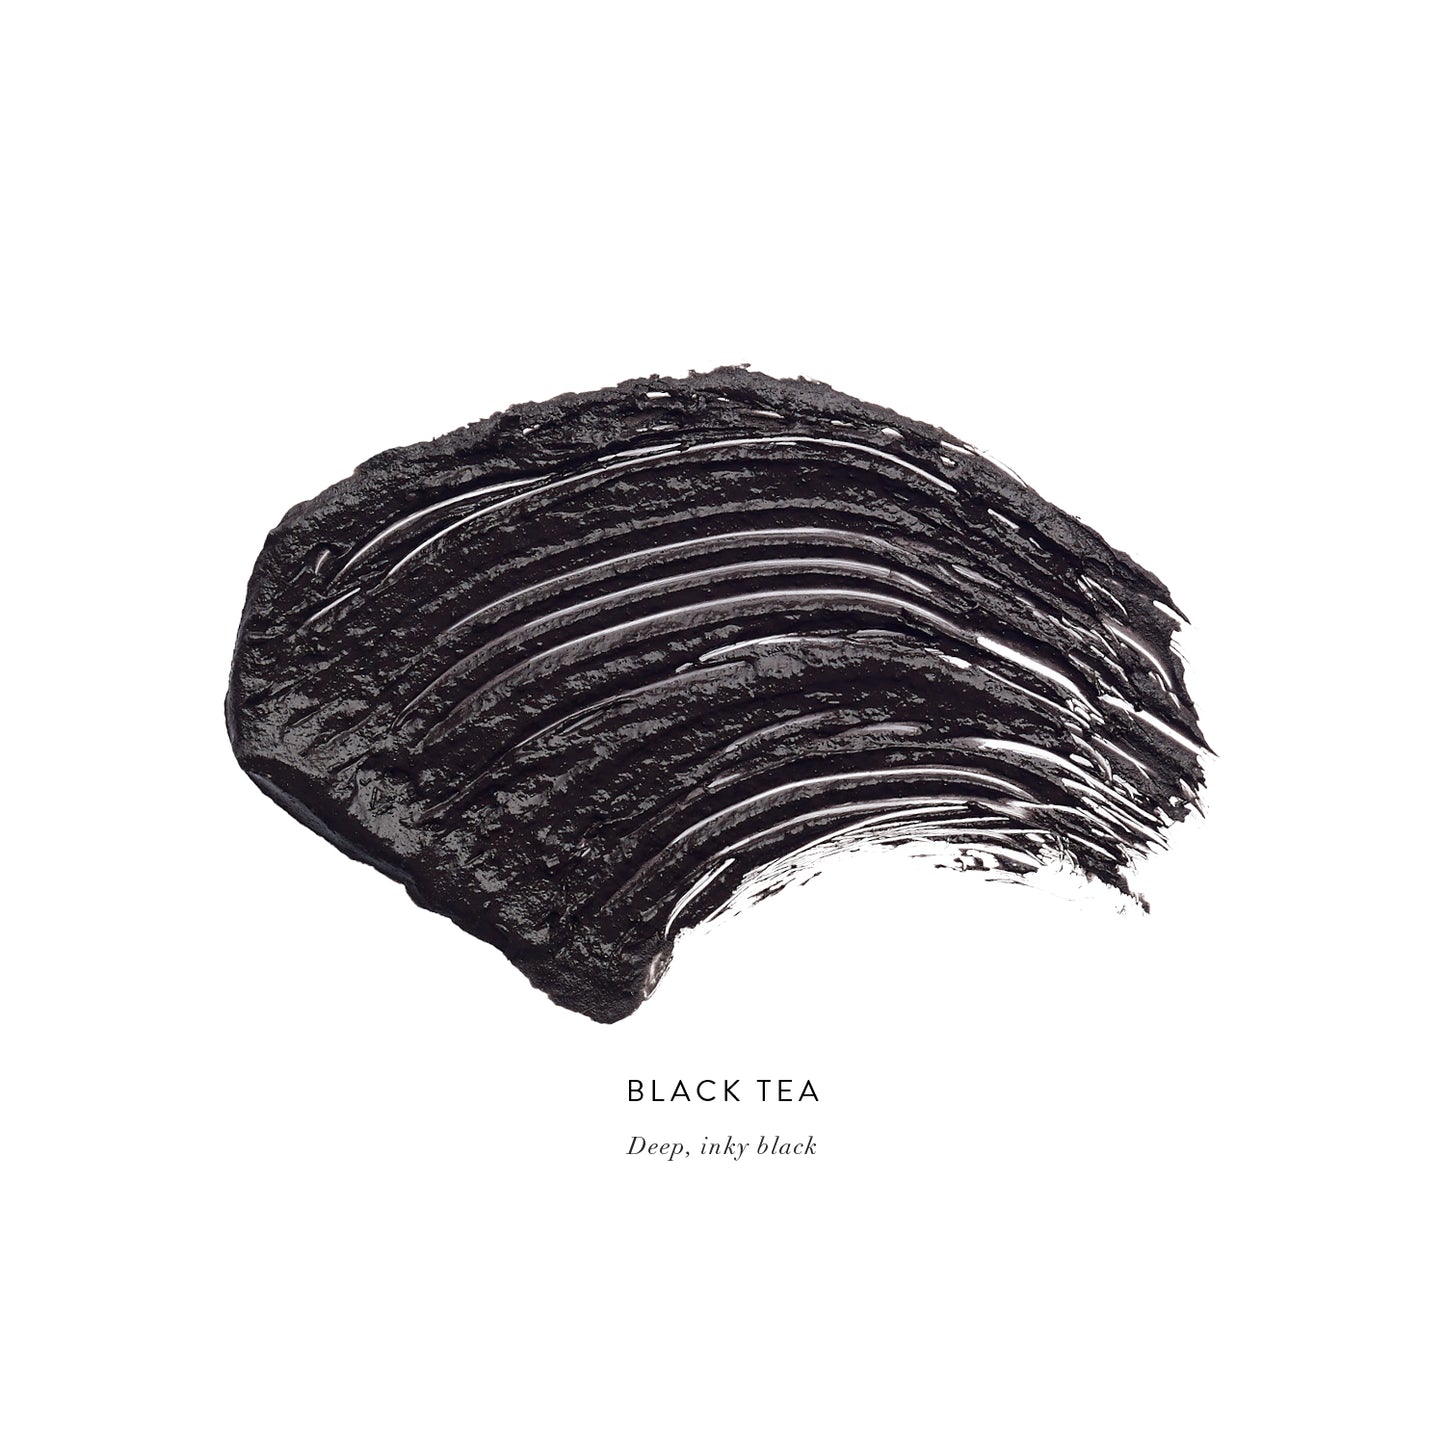 Lük Beautifood Lash Nourish Mascara in Black Tea.  Deep, inky black. 100% Natural Mascara